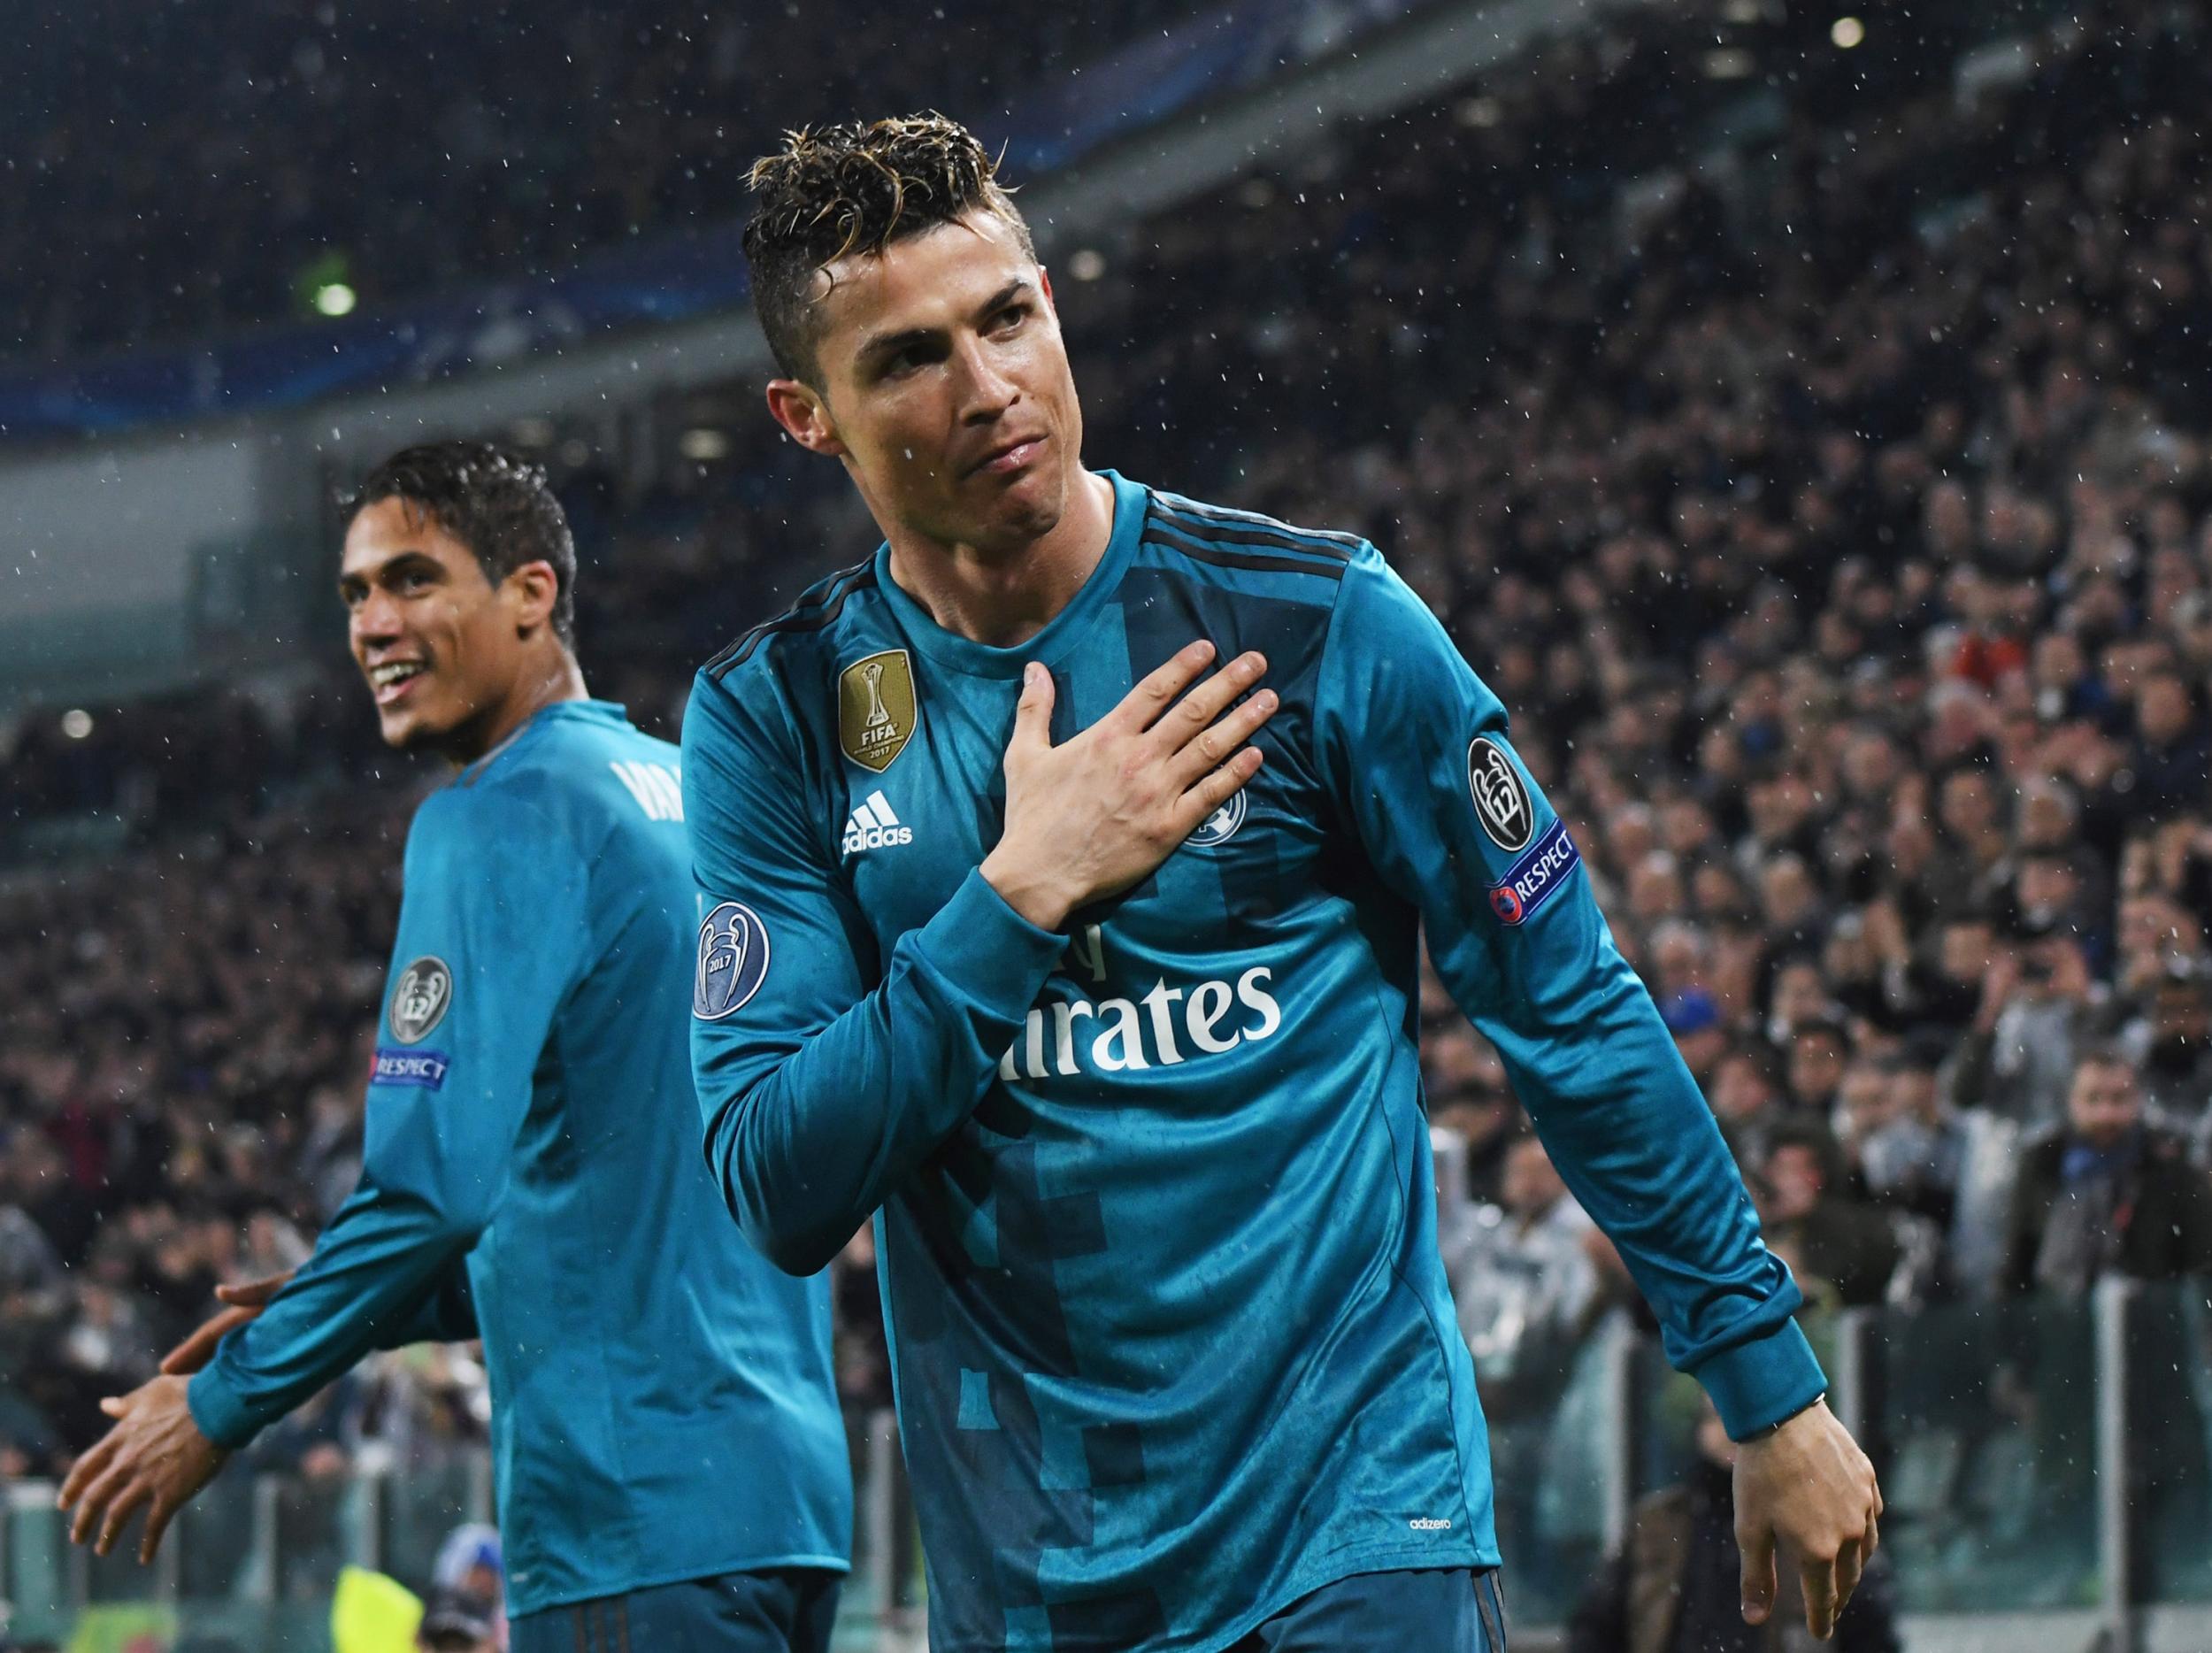 Cristiano Ronaldo's stunning bicycle kick goal helps Real Madrid